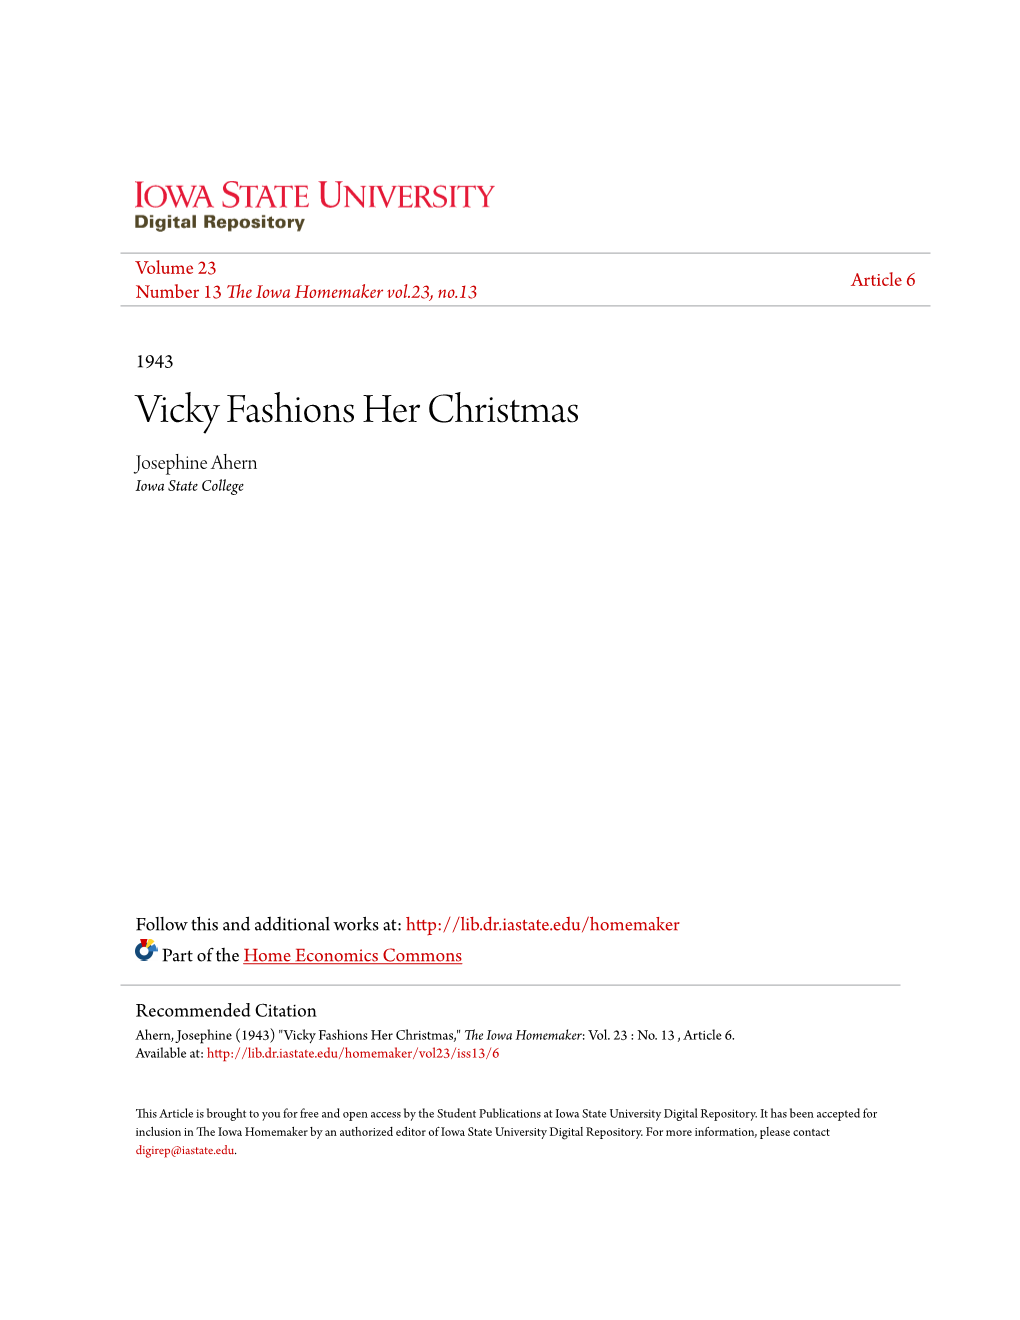 Vicky Fashions Her Christmas Josephine Ahern Iowa State College